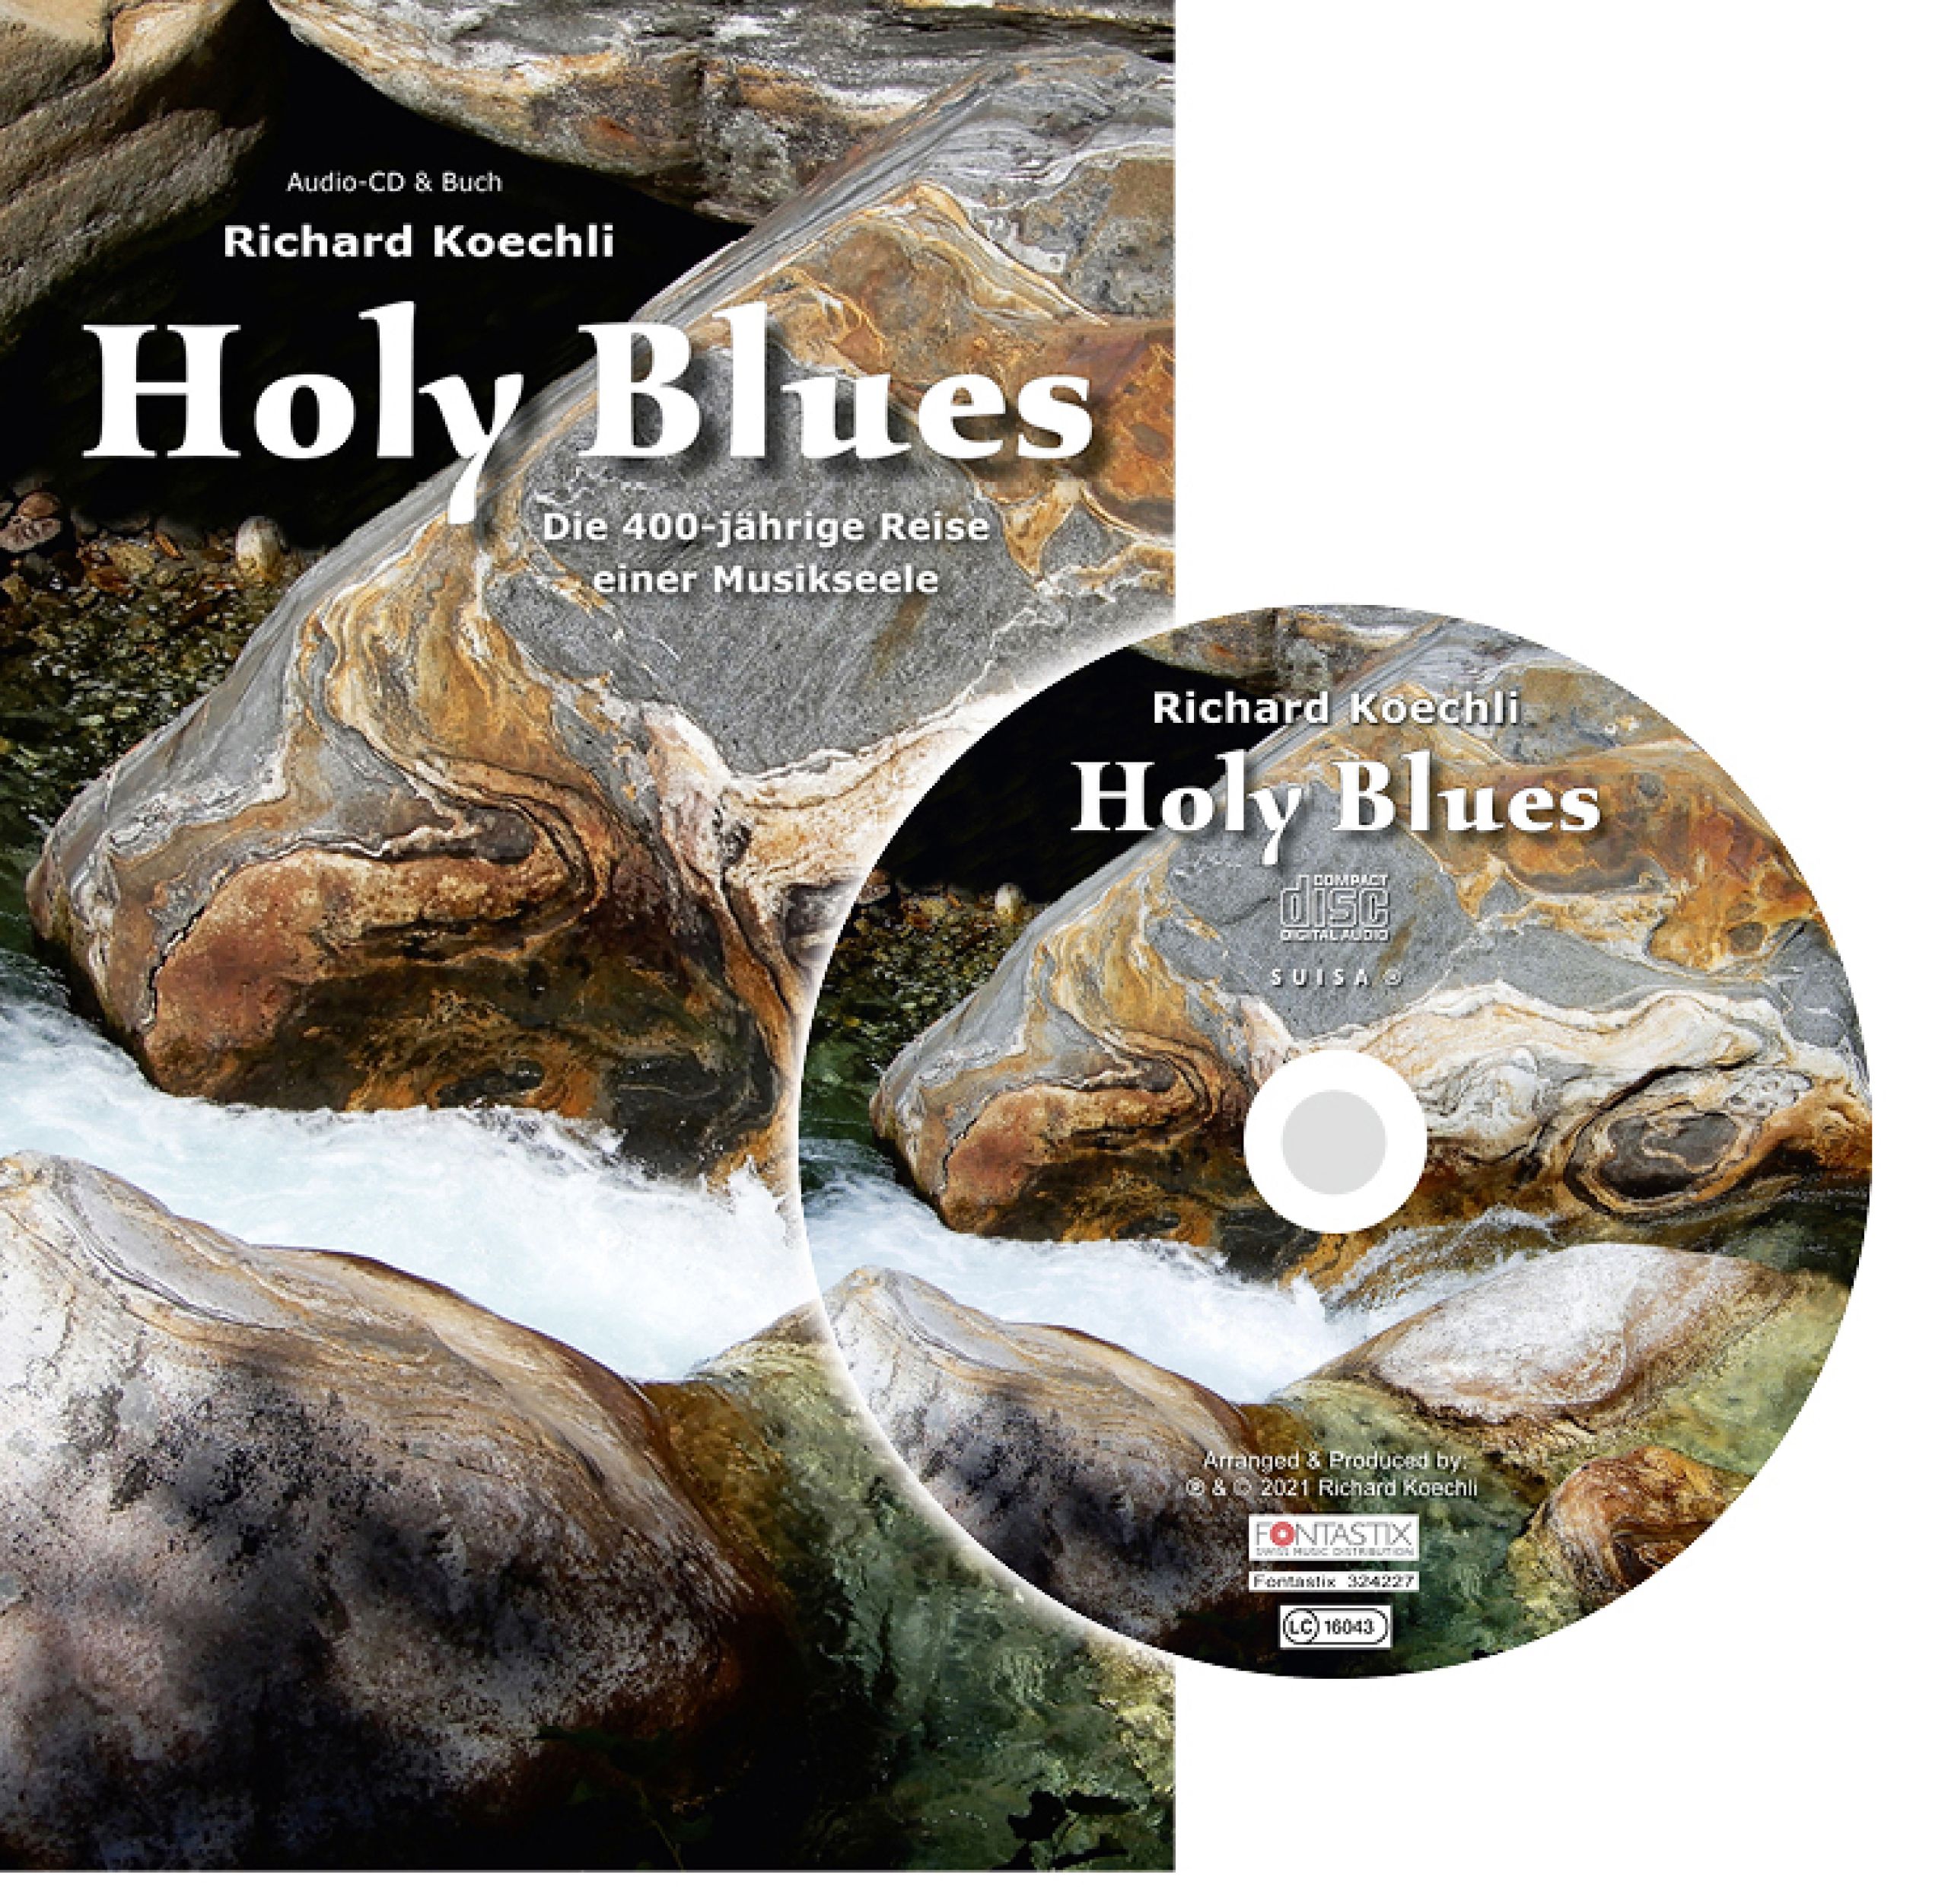 Holy Blues Richard Koechli Cover Buch 